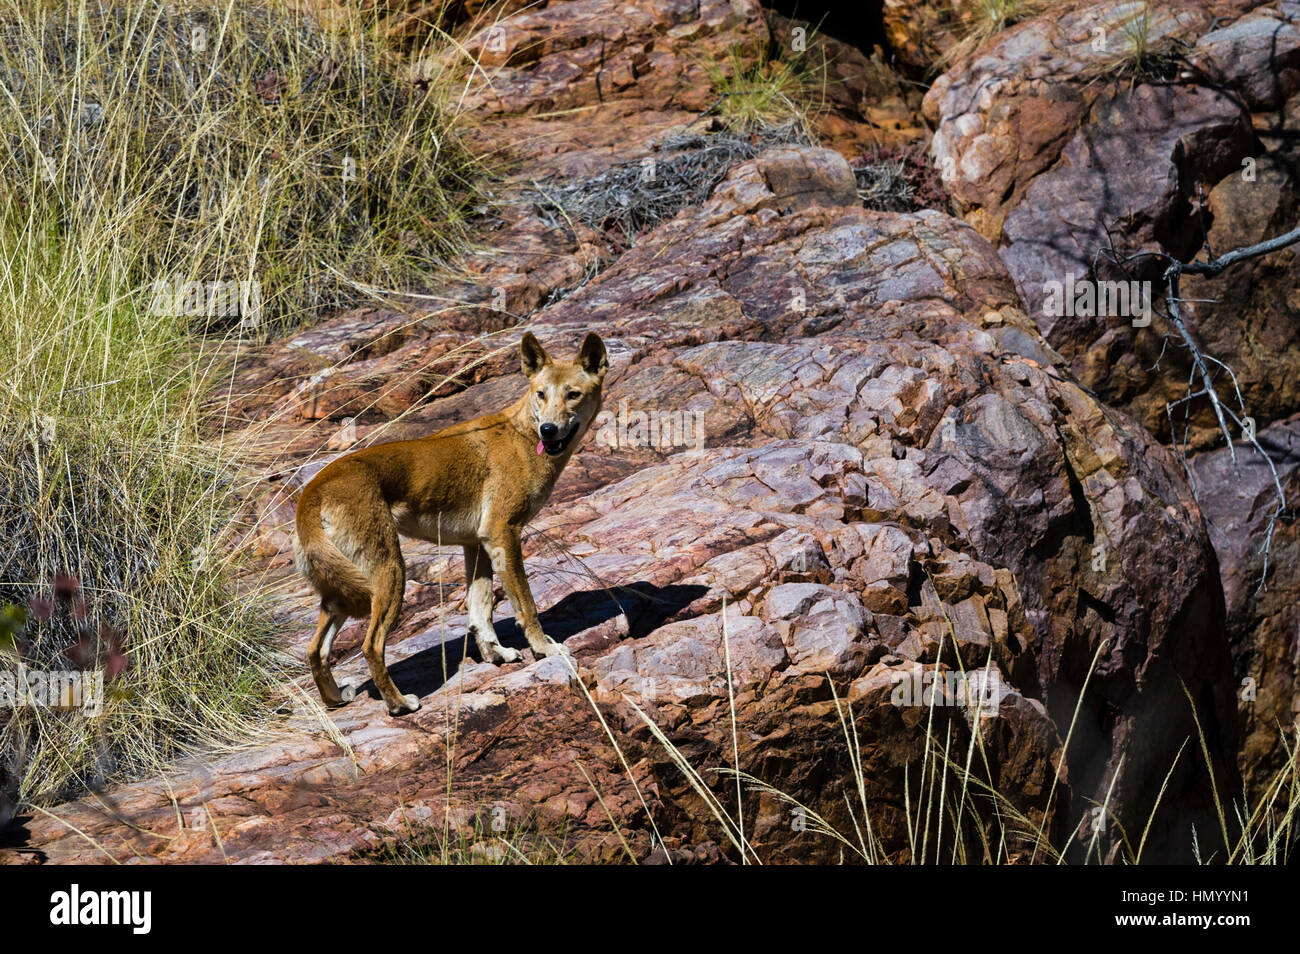 A cautious Dingo on a desert cliff. Stock Photo